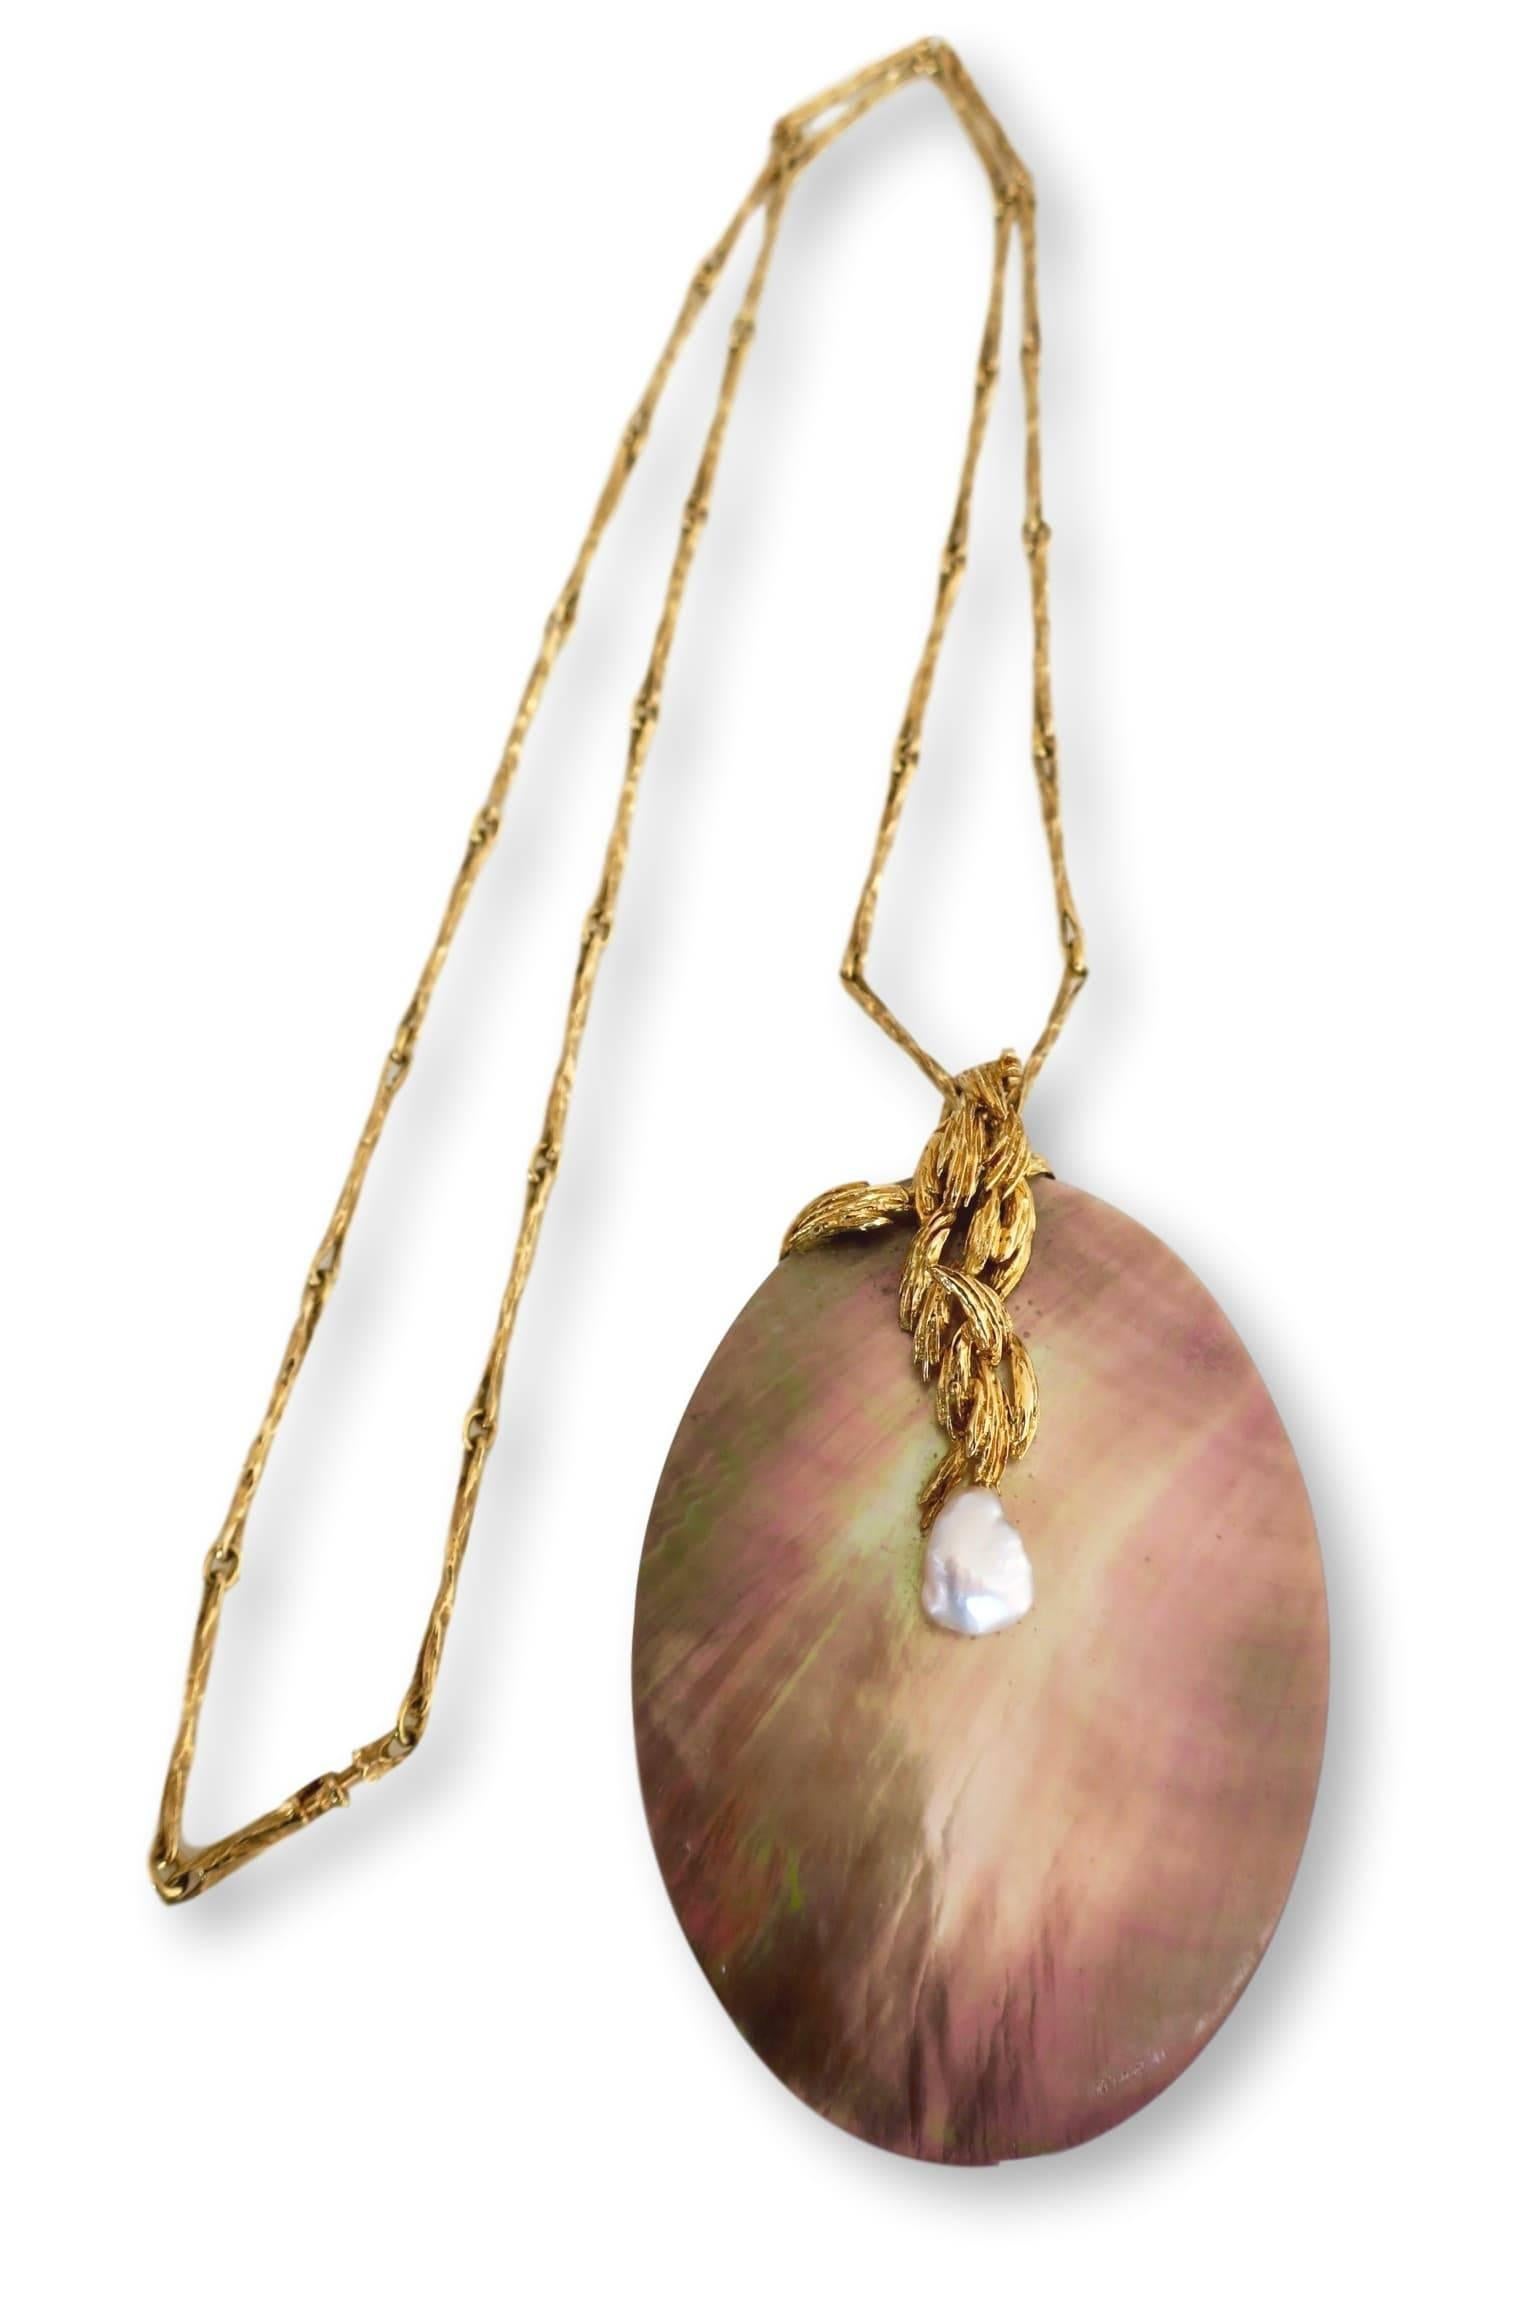 18k gold pendant necklace by Swiss designer Gilbert Albert. The 29